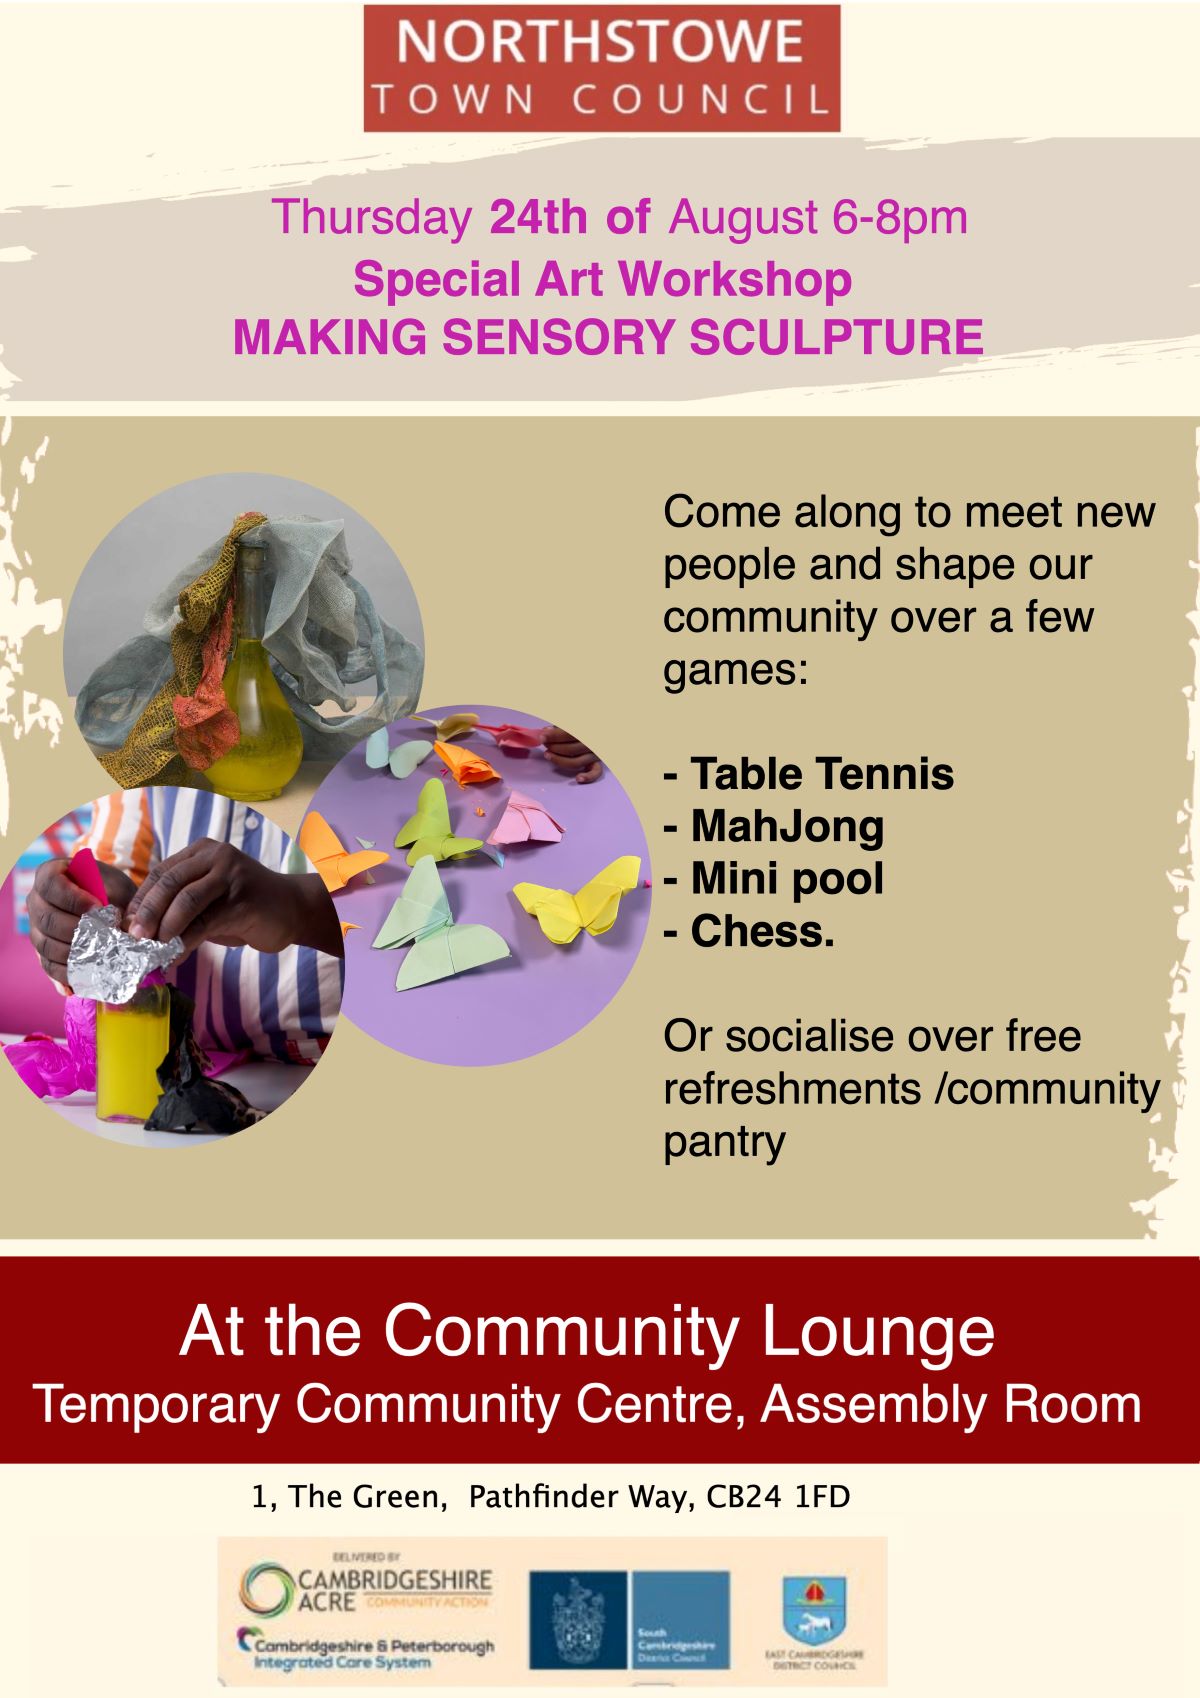 Art workshop to make sensory sculptures - 24th August at Community Lounge